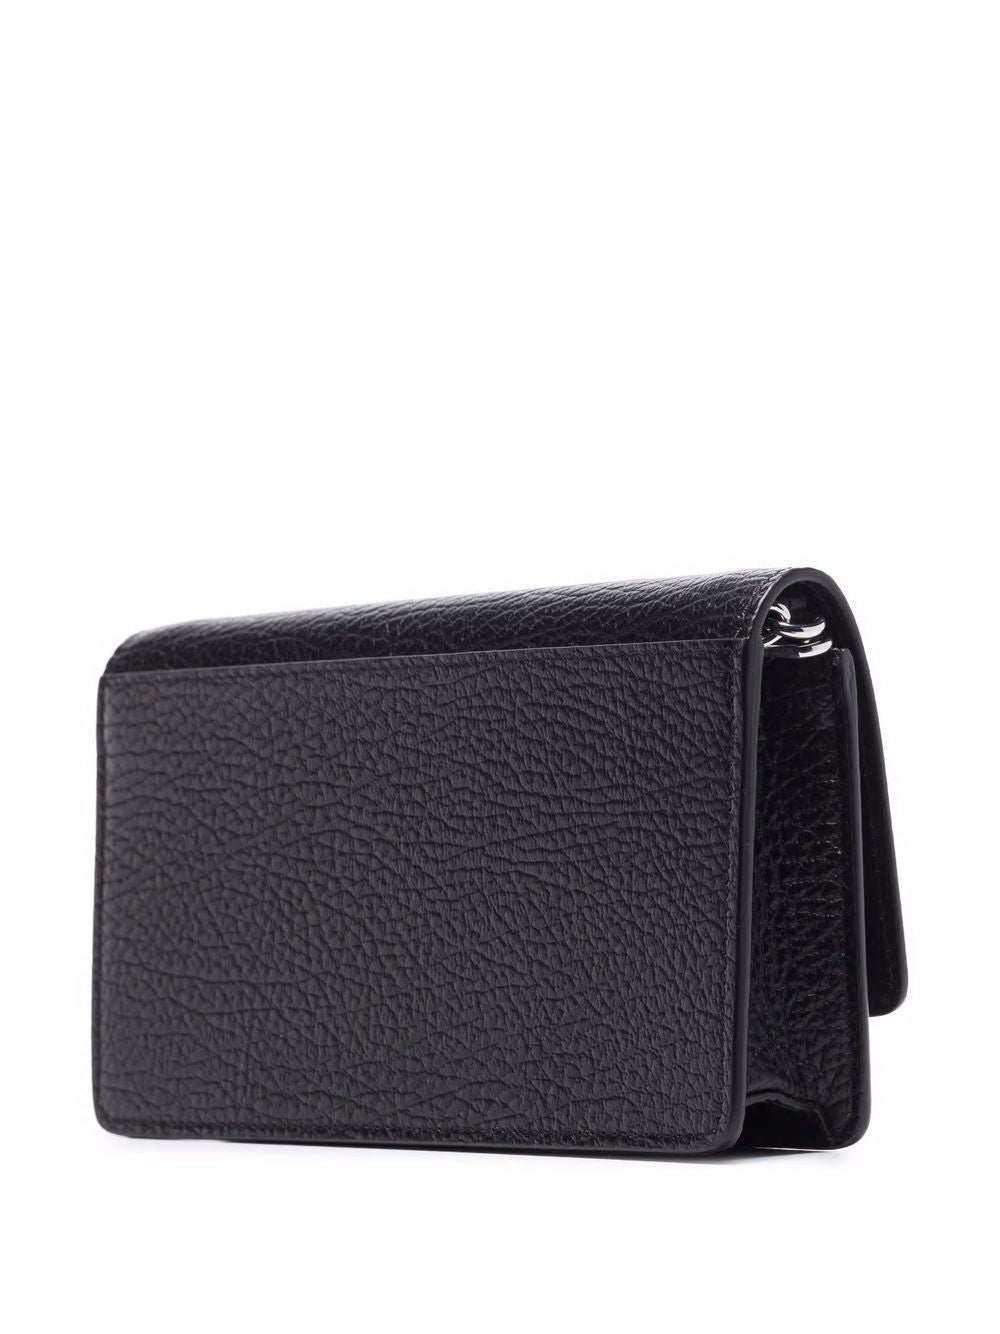 MAISON MARGIELA Mini Black Leather Crossbody Handbag with Iconic Stitch Detail and Chain Strap